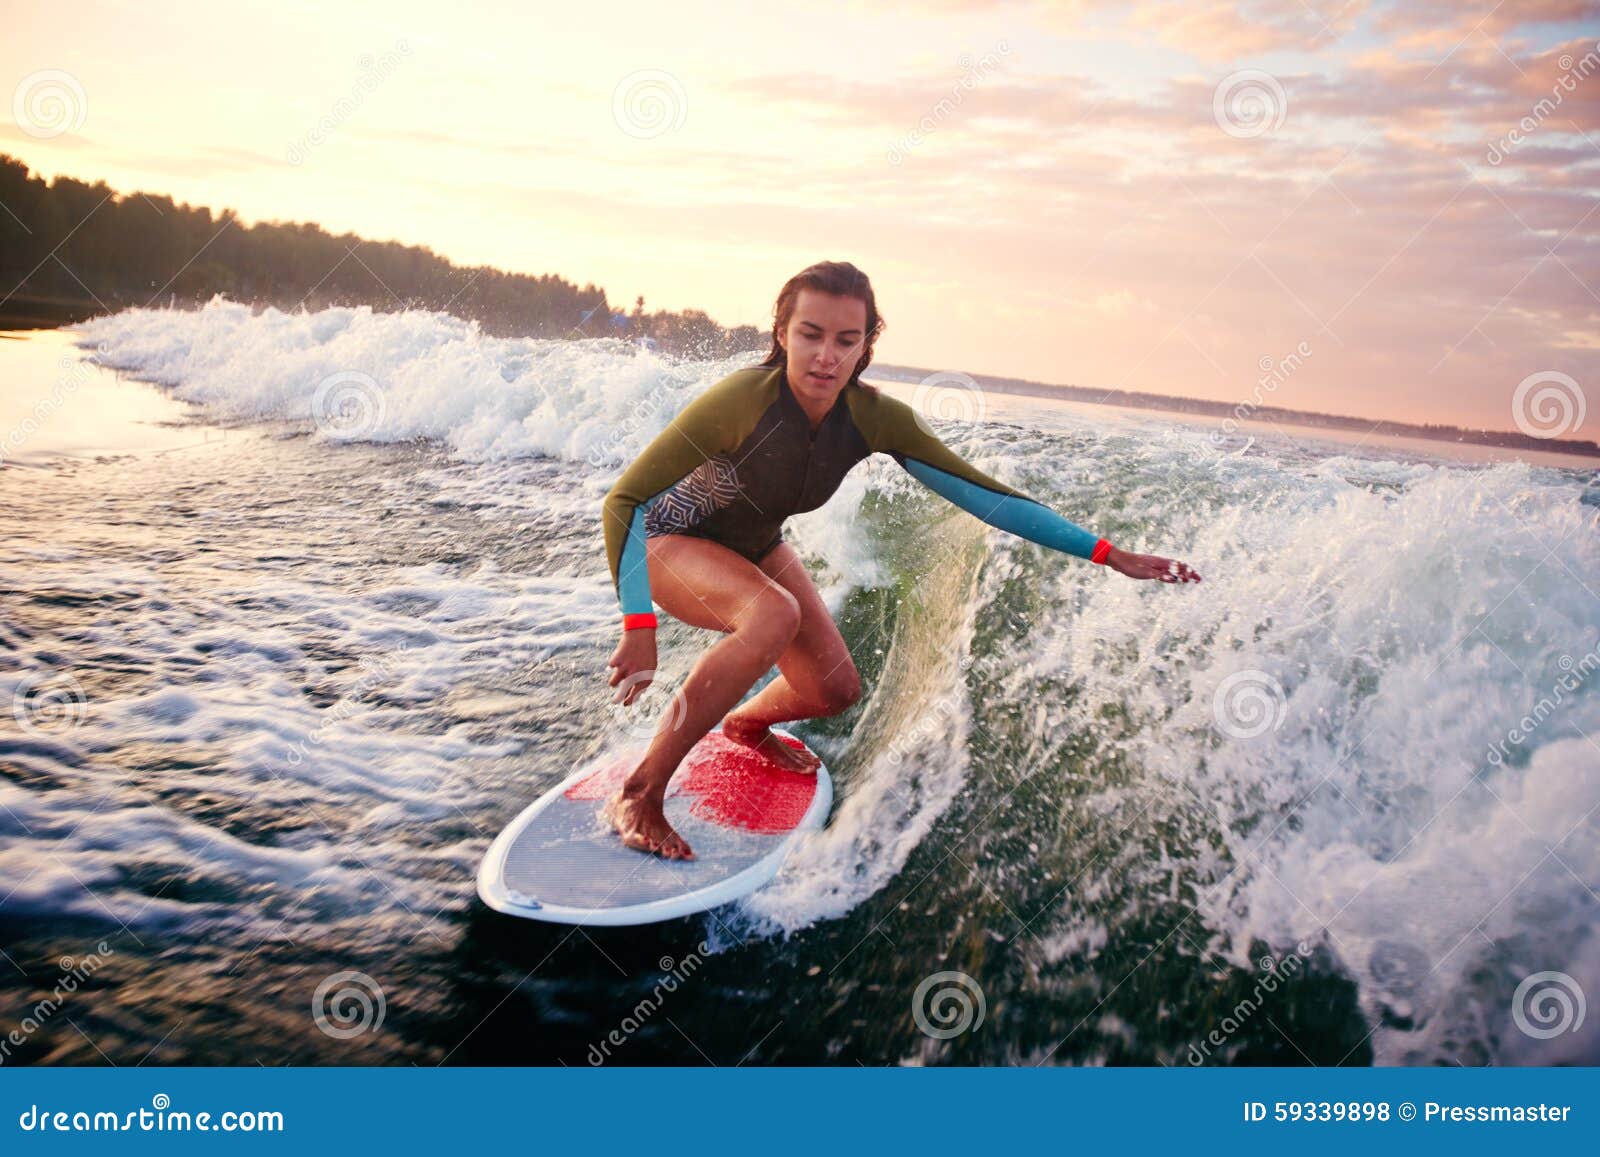 Woman surfboarding stock photo. Image of balance, recreation - 59339898